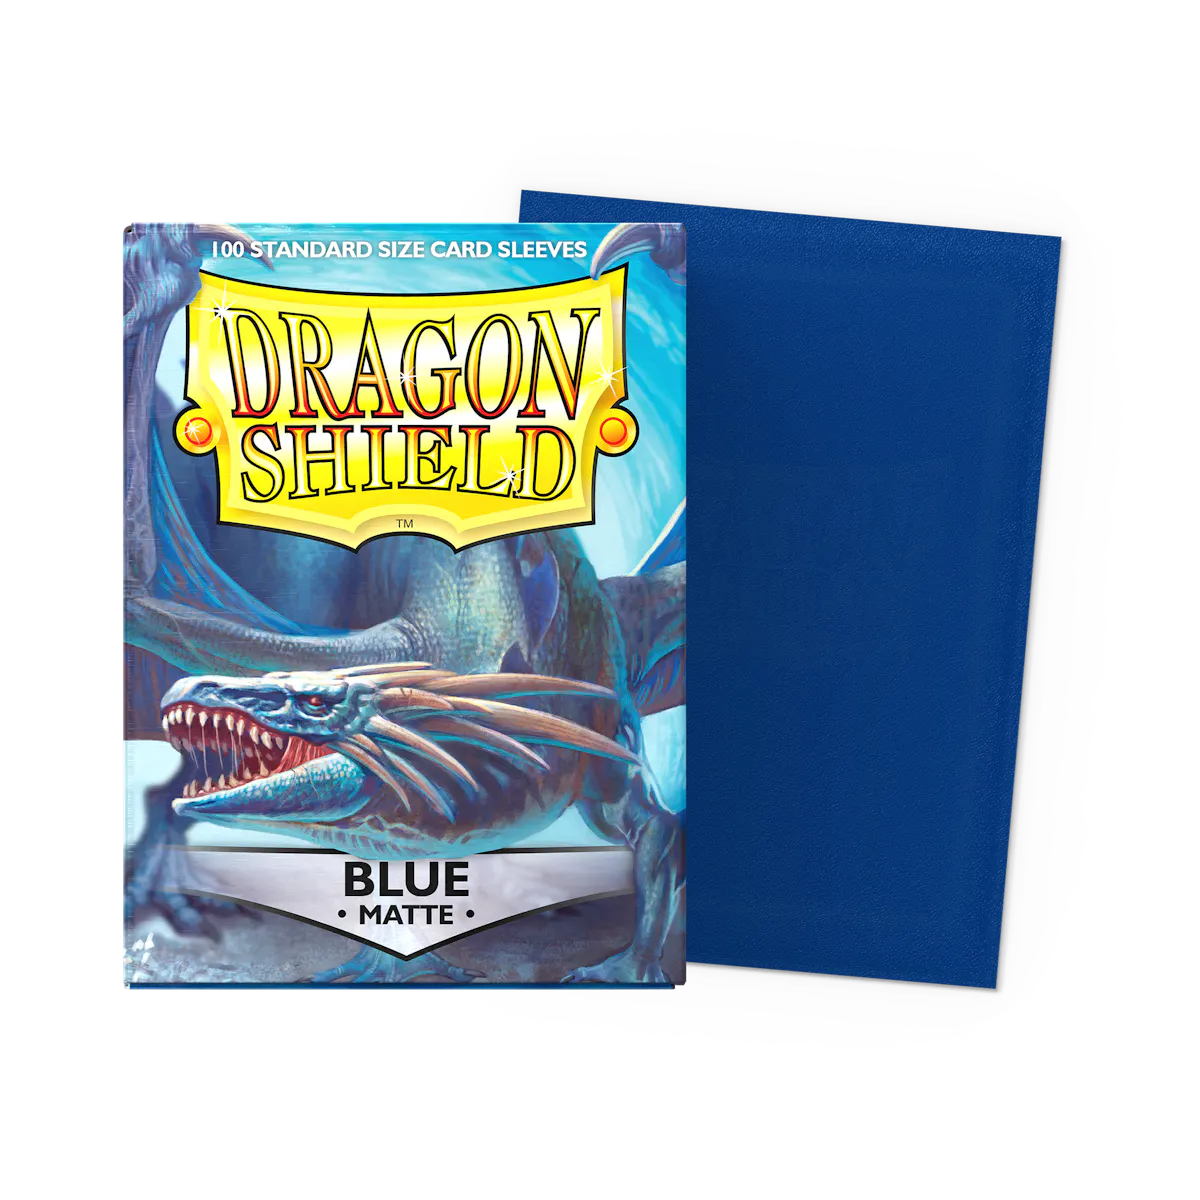 Dragon Shield Matte Blue Sleeves (100 pack)